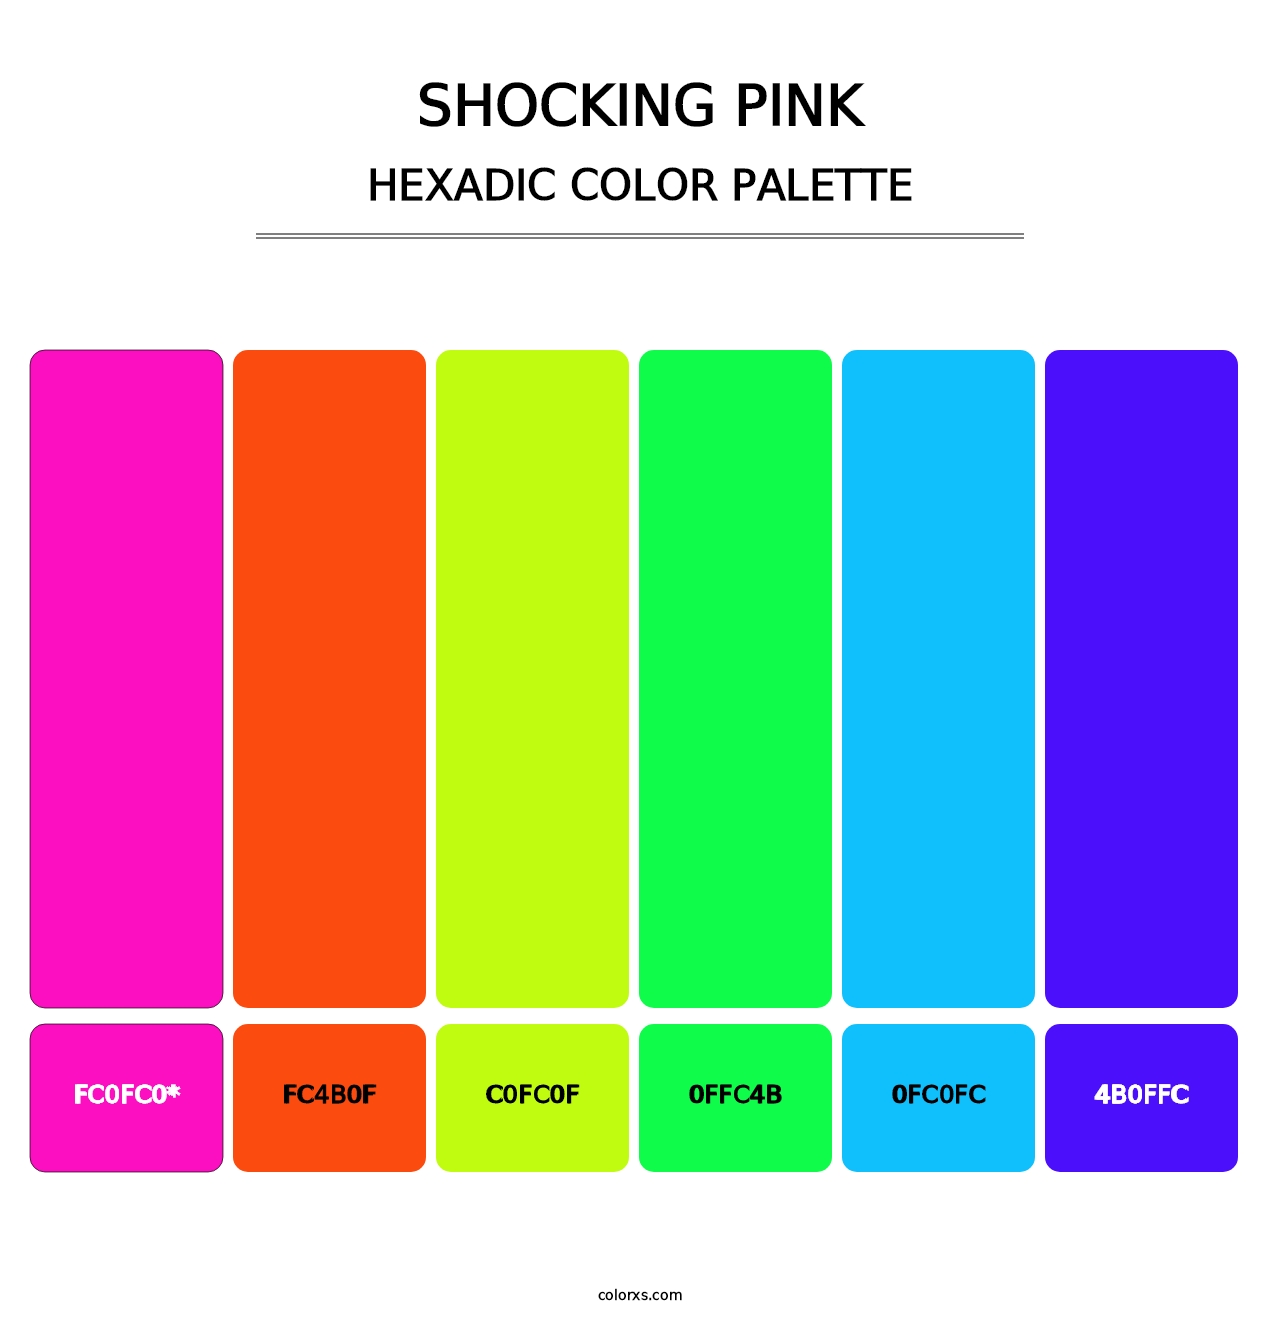 Shocking Pink - Hexadic Color Palette